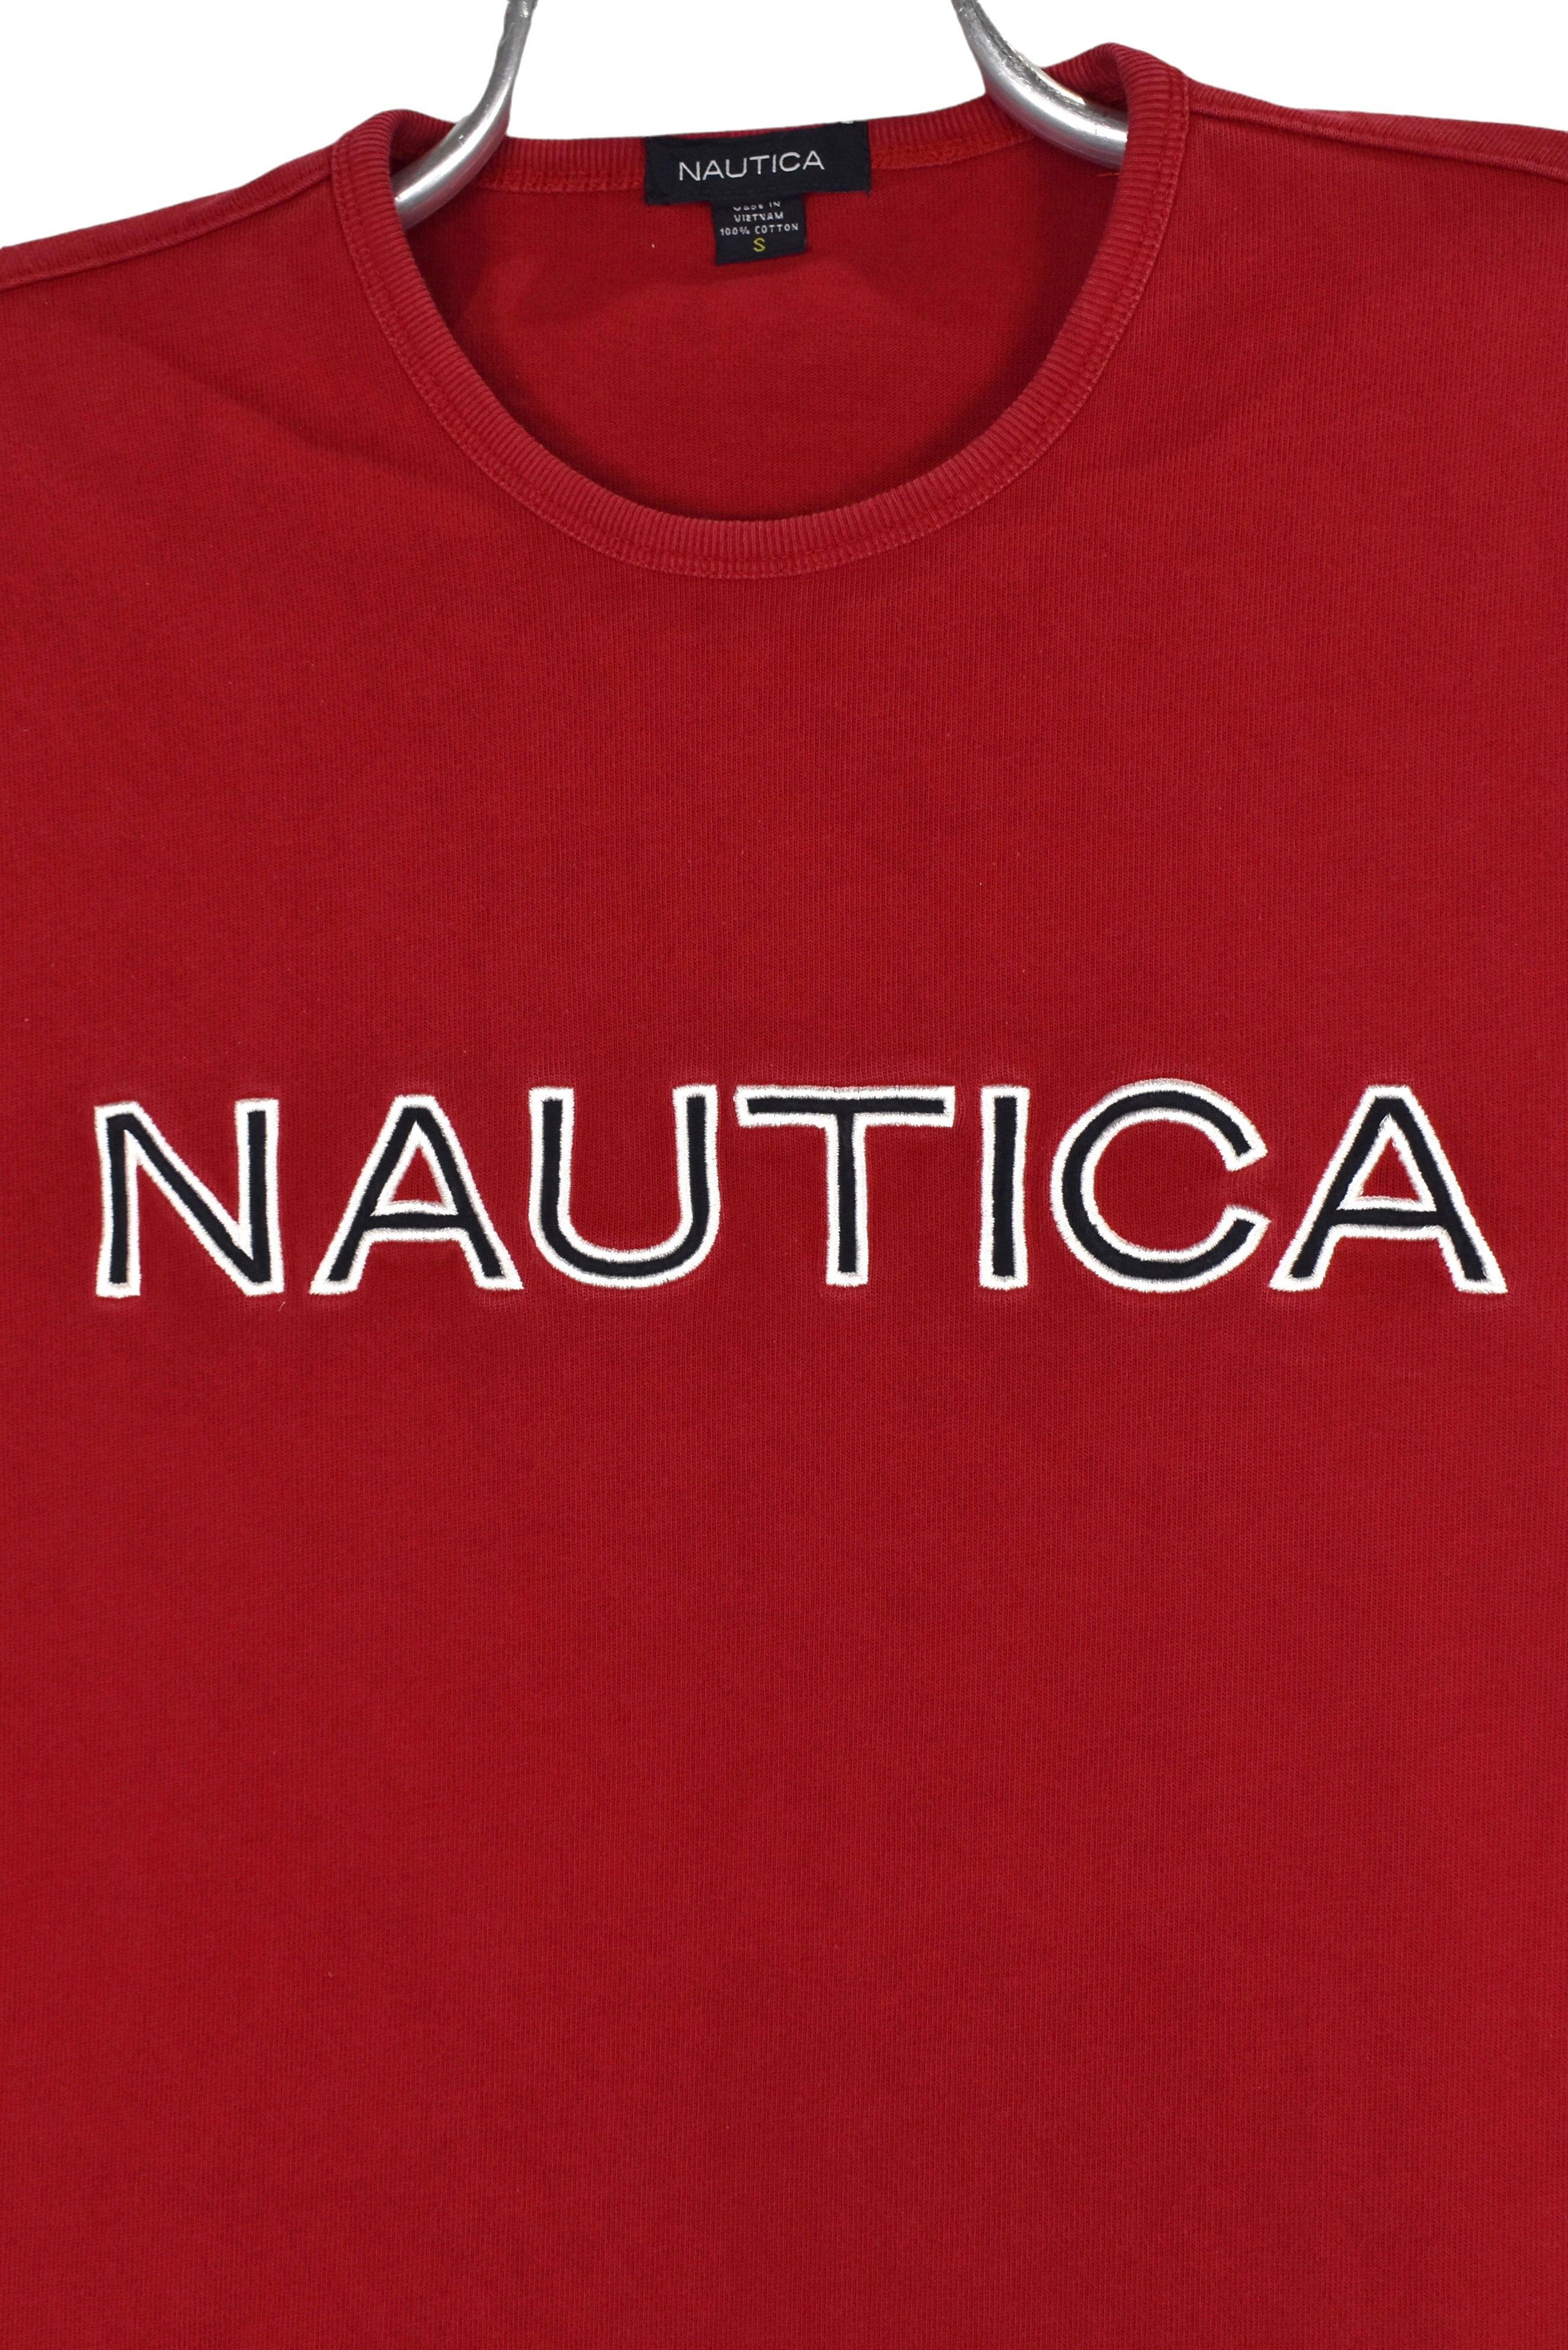 Vintage Nautica sweatshirt (M), red embroidered crewneck